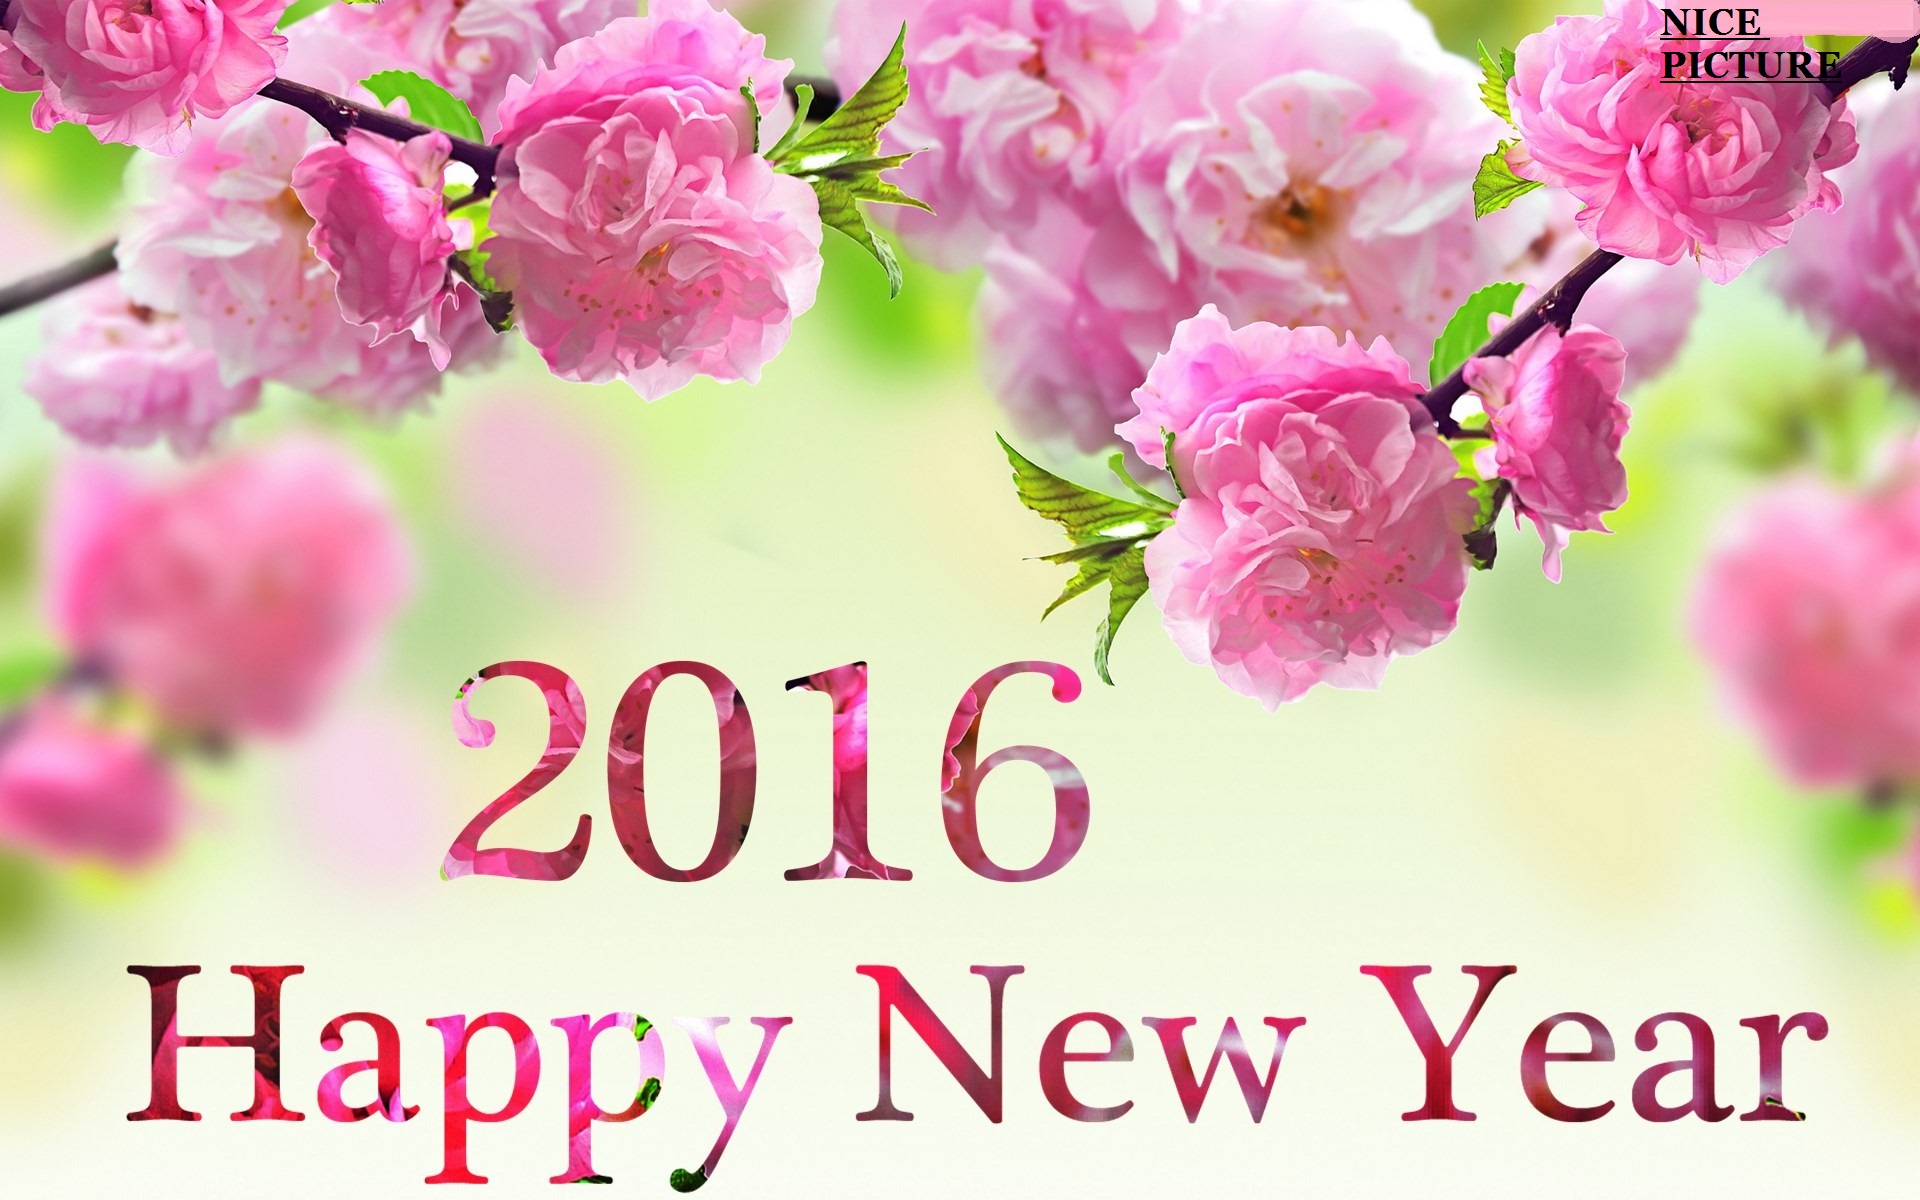 Happy new year 2016 photo